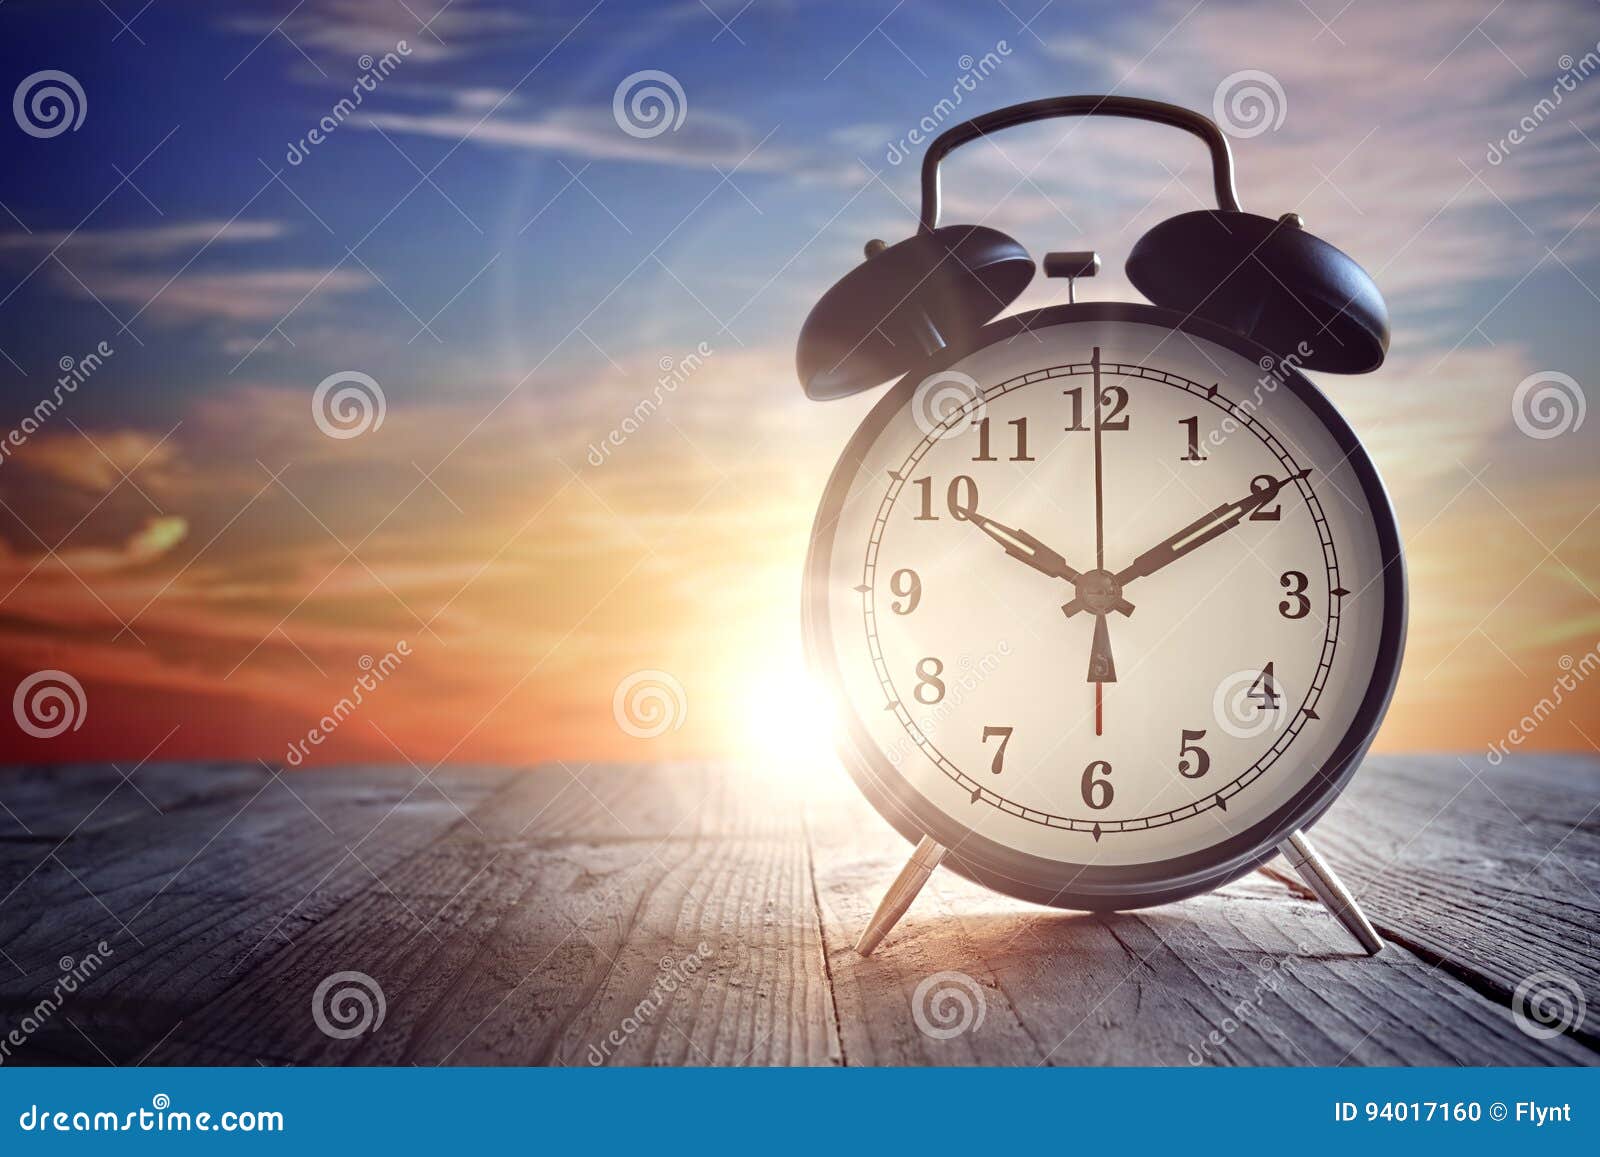 Alarm clock at sunset stock photo. Image of alert, alarm - 94017160